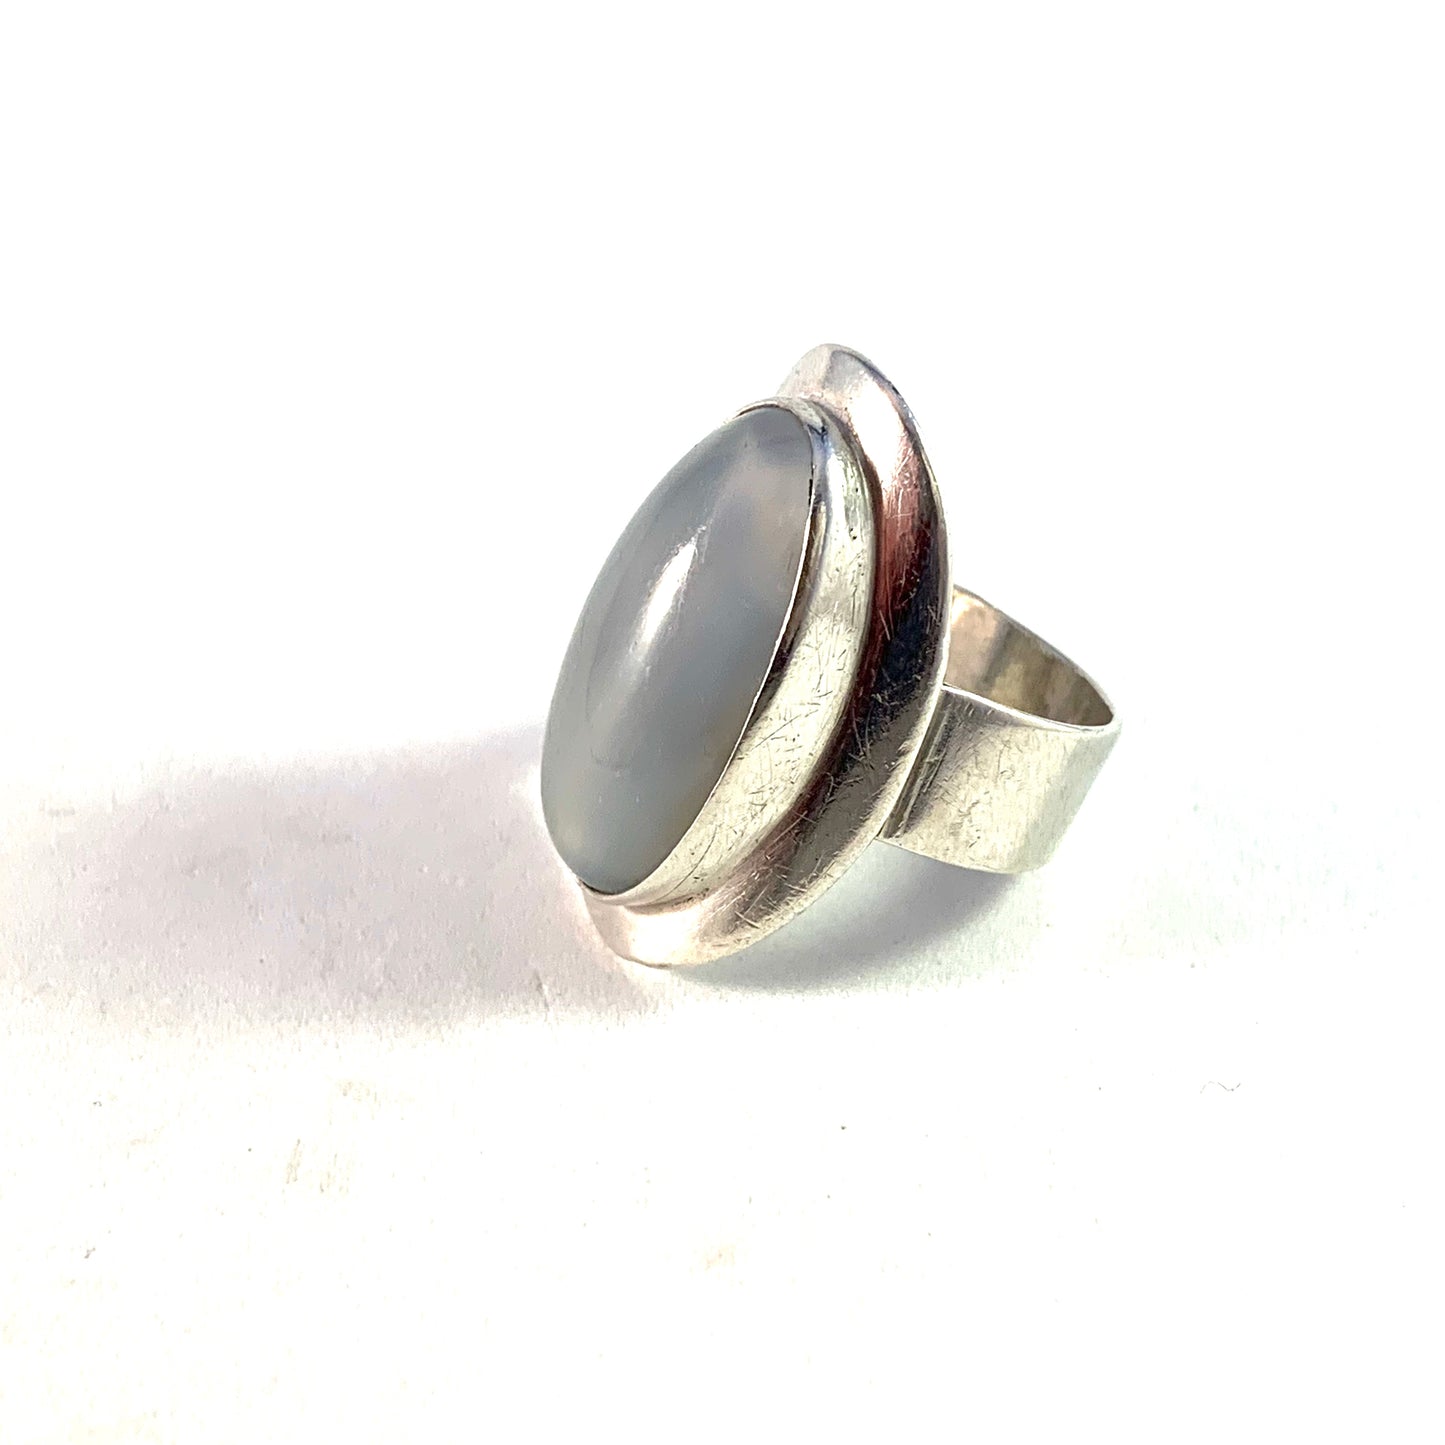 Swedish Import 1960 Modernist Sterling Silver Moonstone Ring.